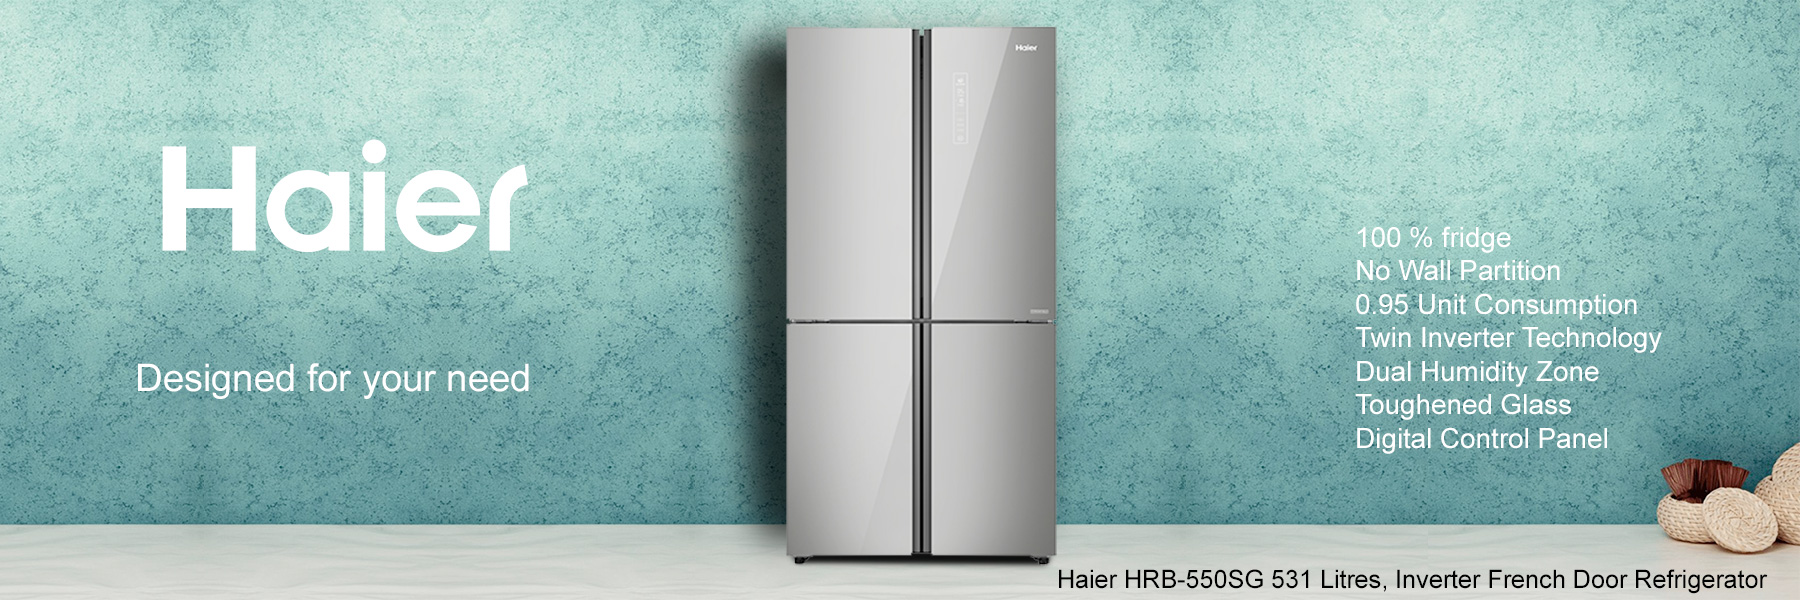 Haier HRB-550SG 531 Litres, Inverter French Door Refrigerator